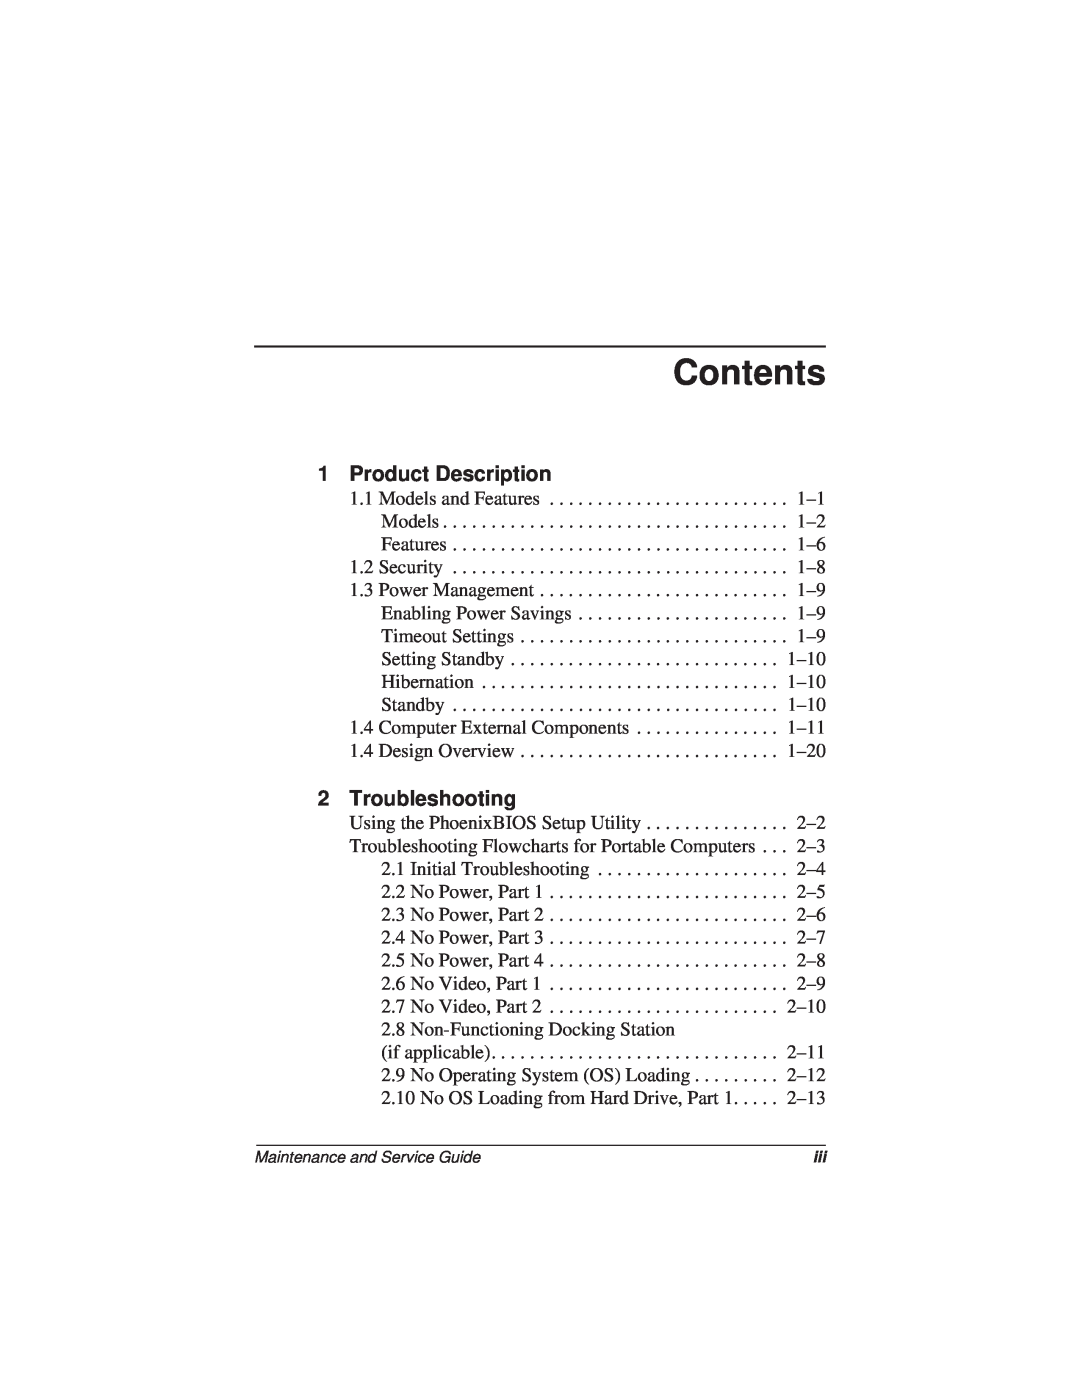 Compaq N110 manual Contents, Product Description, Troubleshooting 